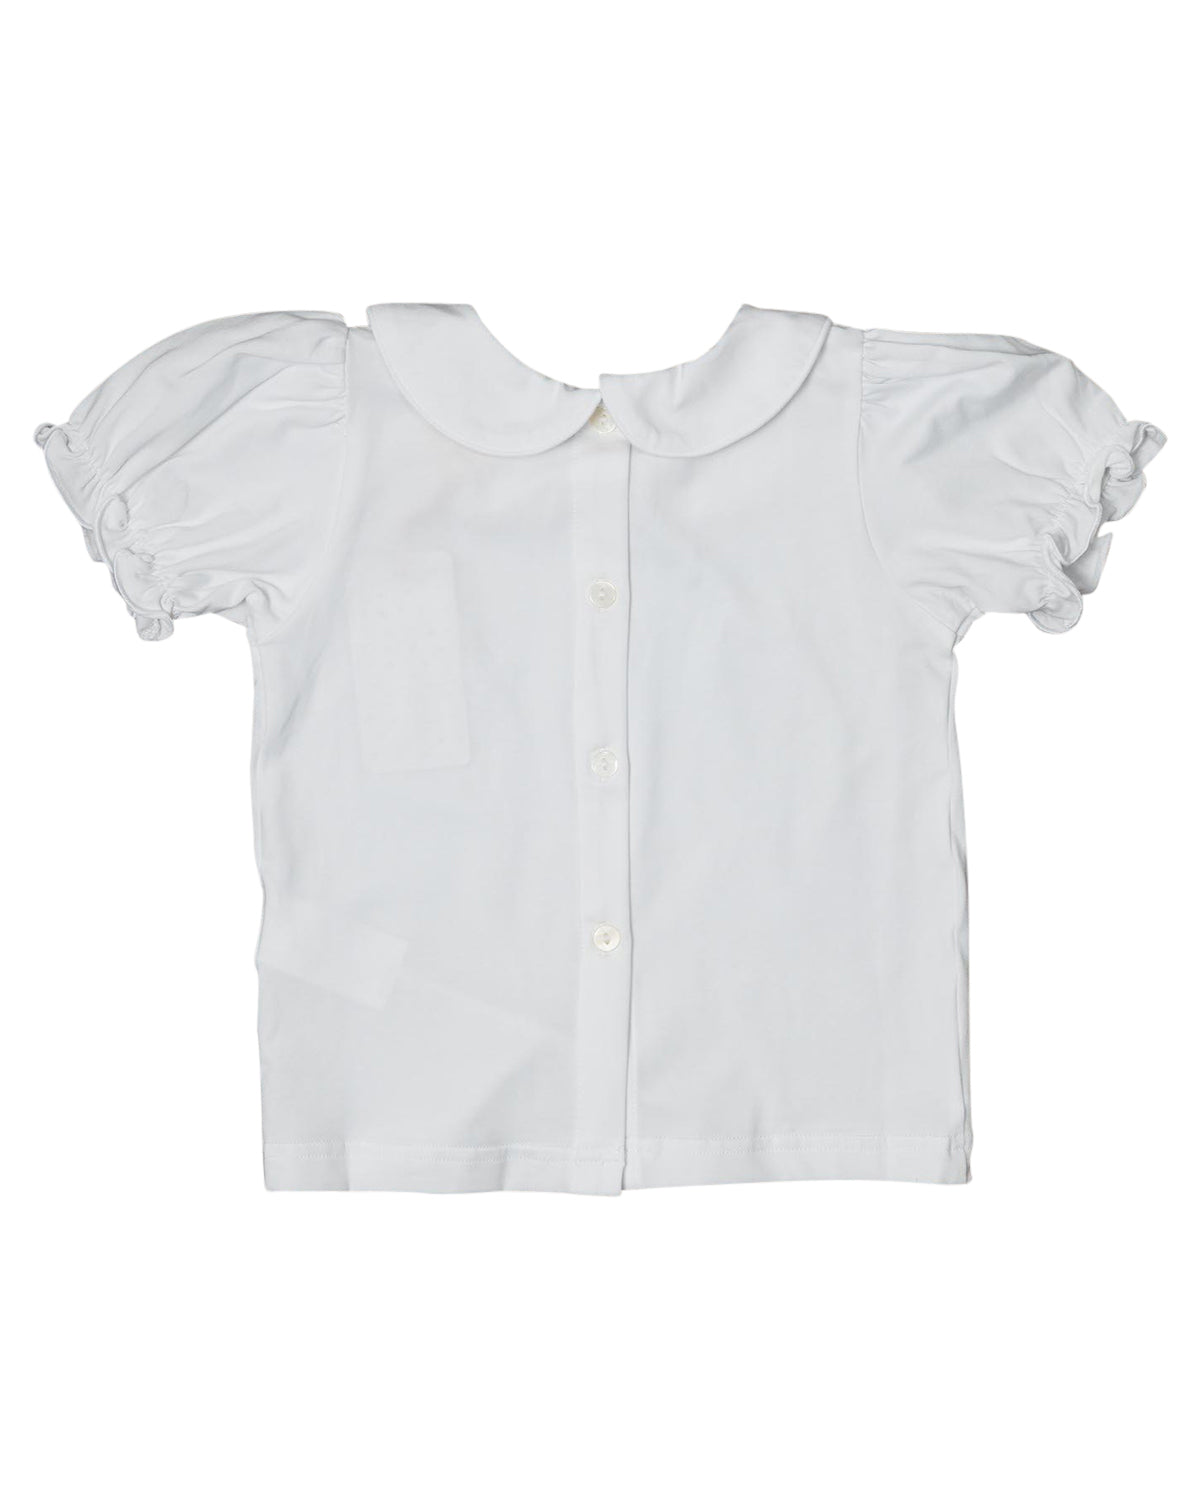 White Knit Girls Short Sleeve Shirt